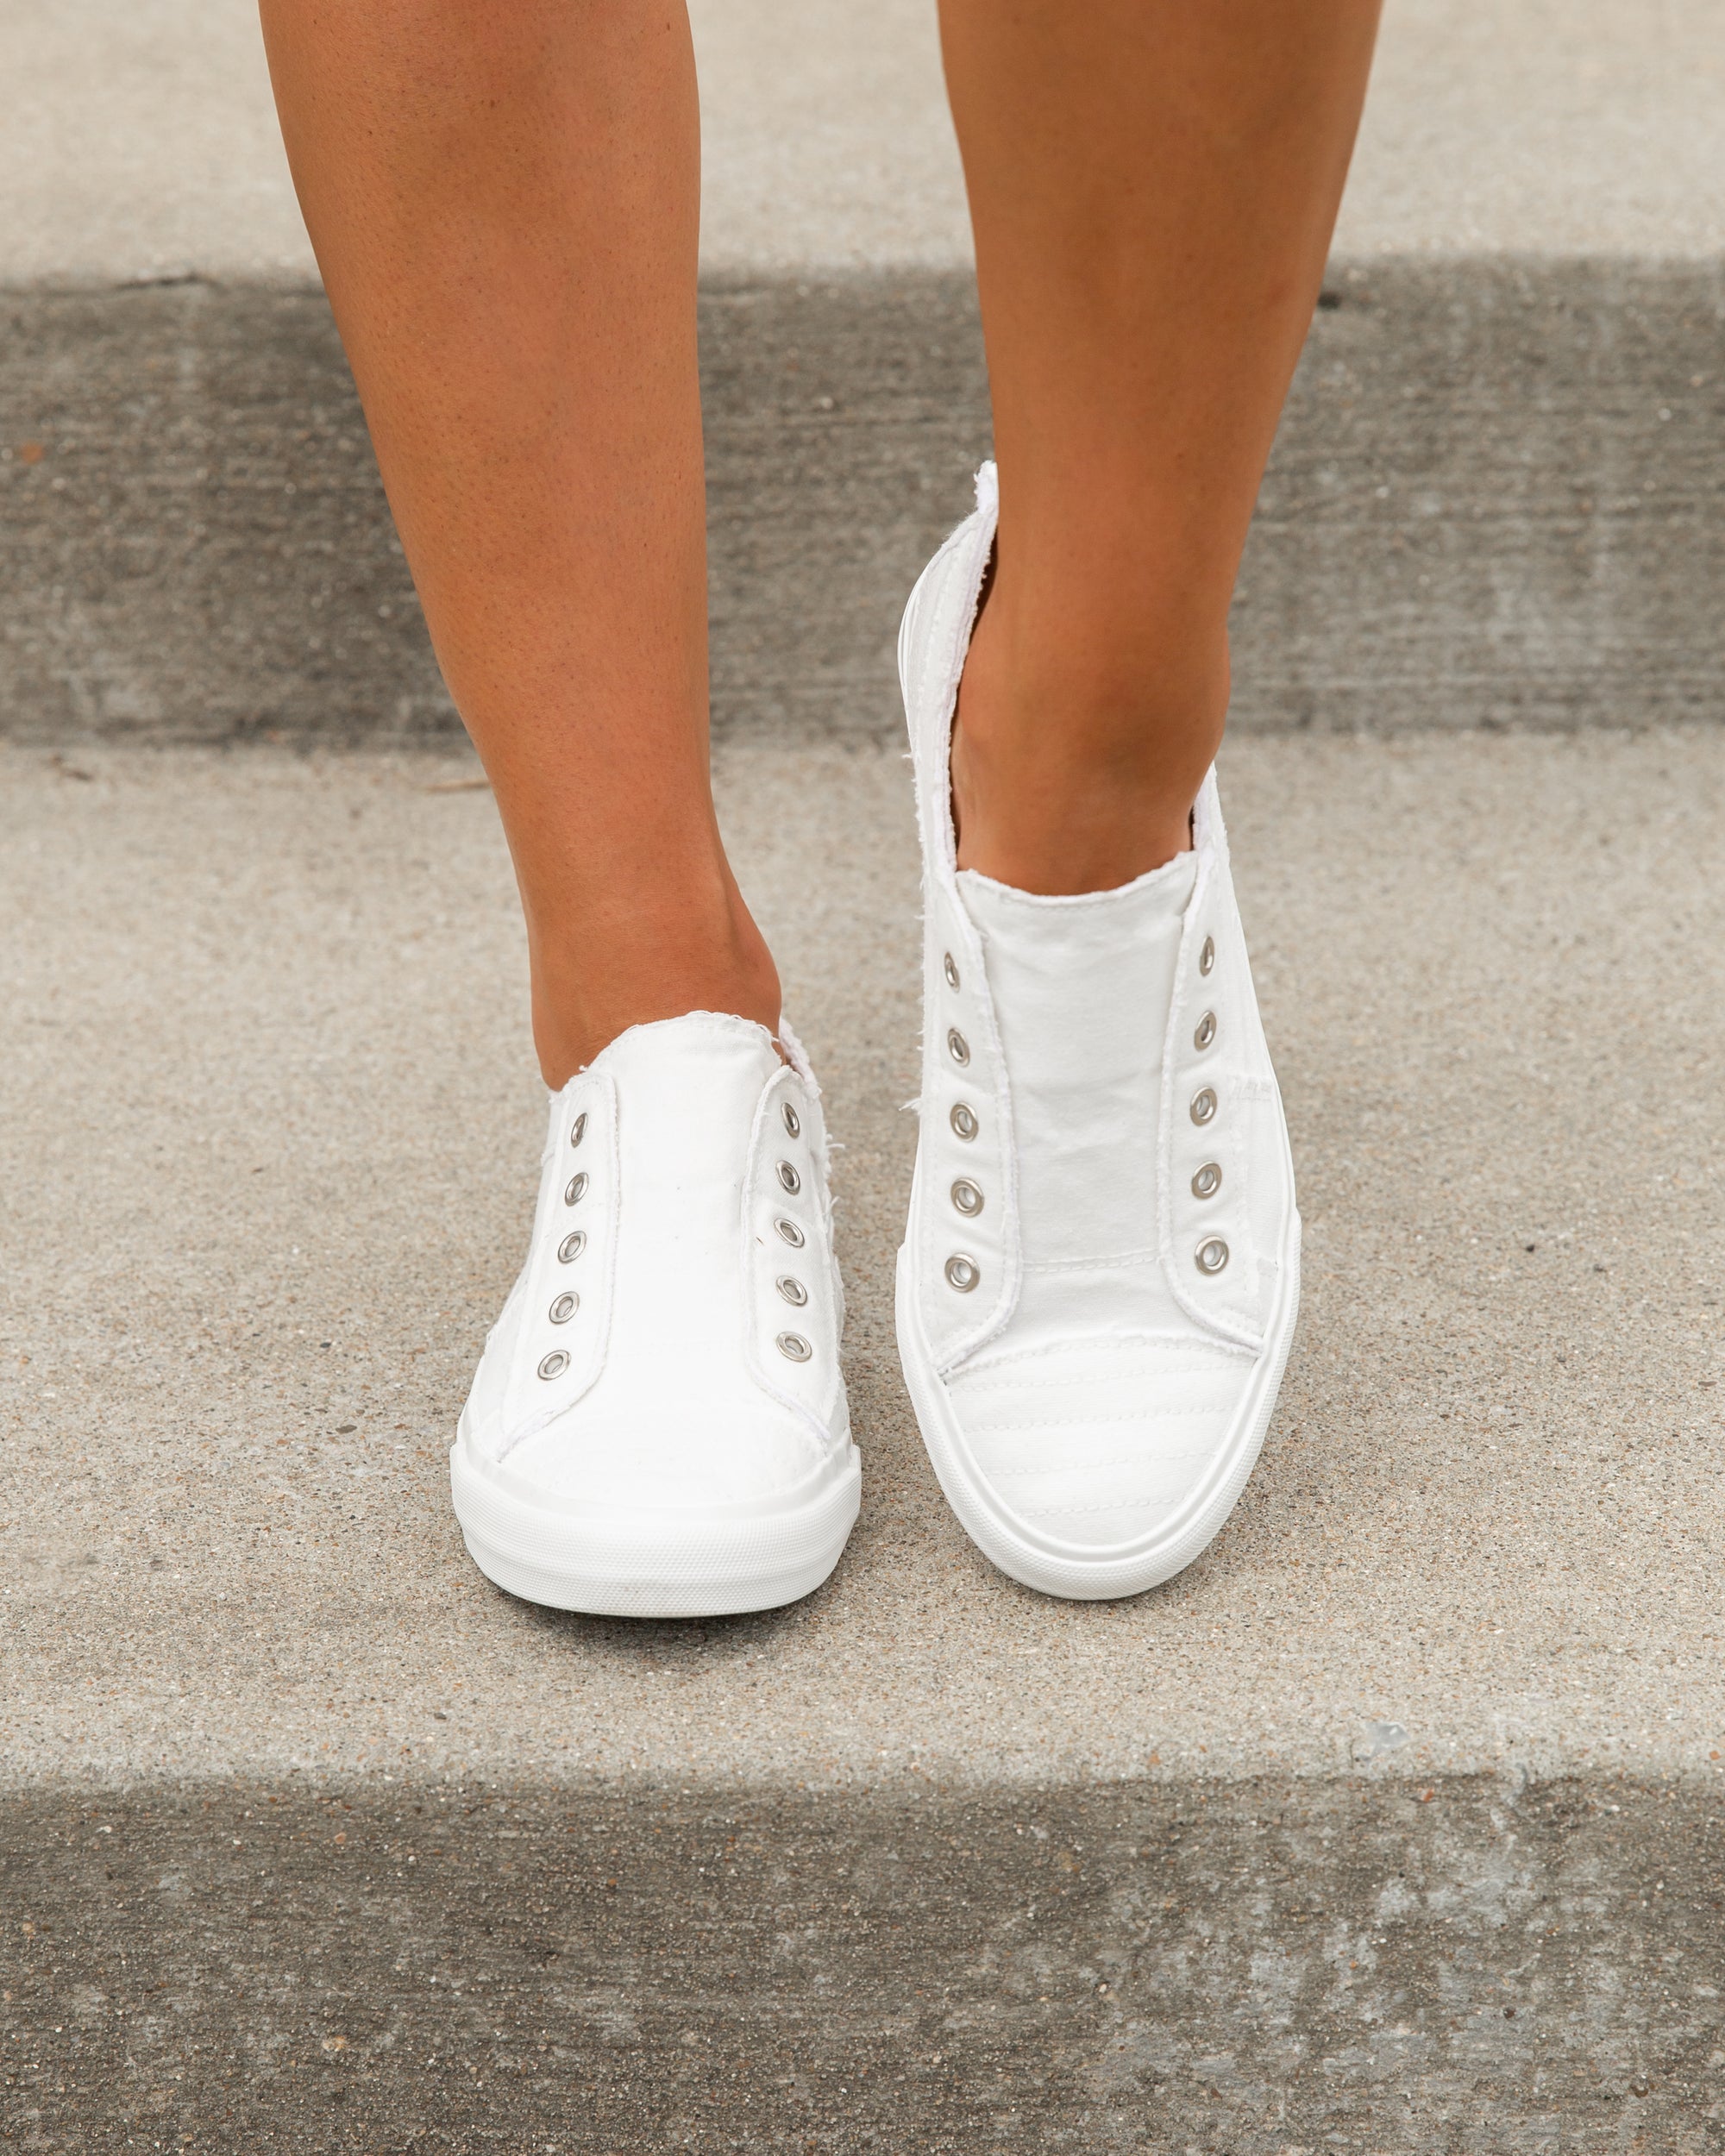 white slip on athletic shoes